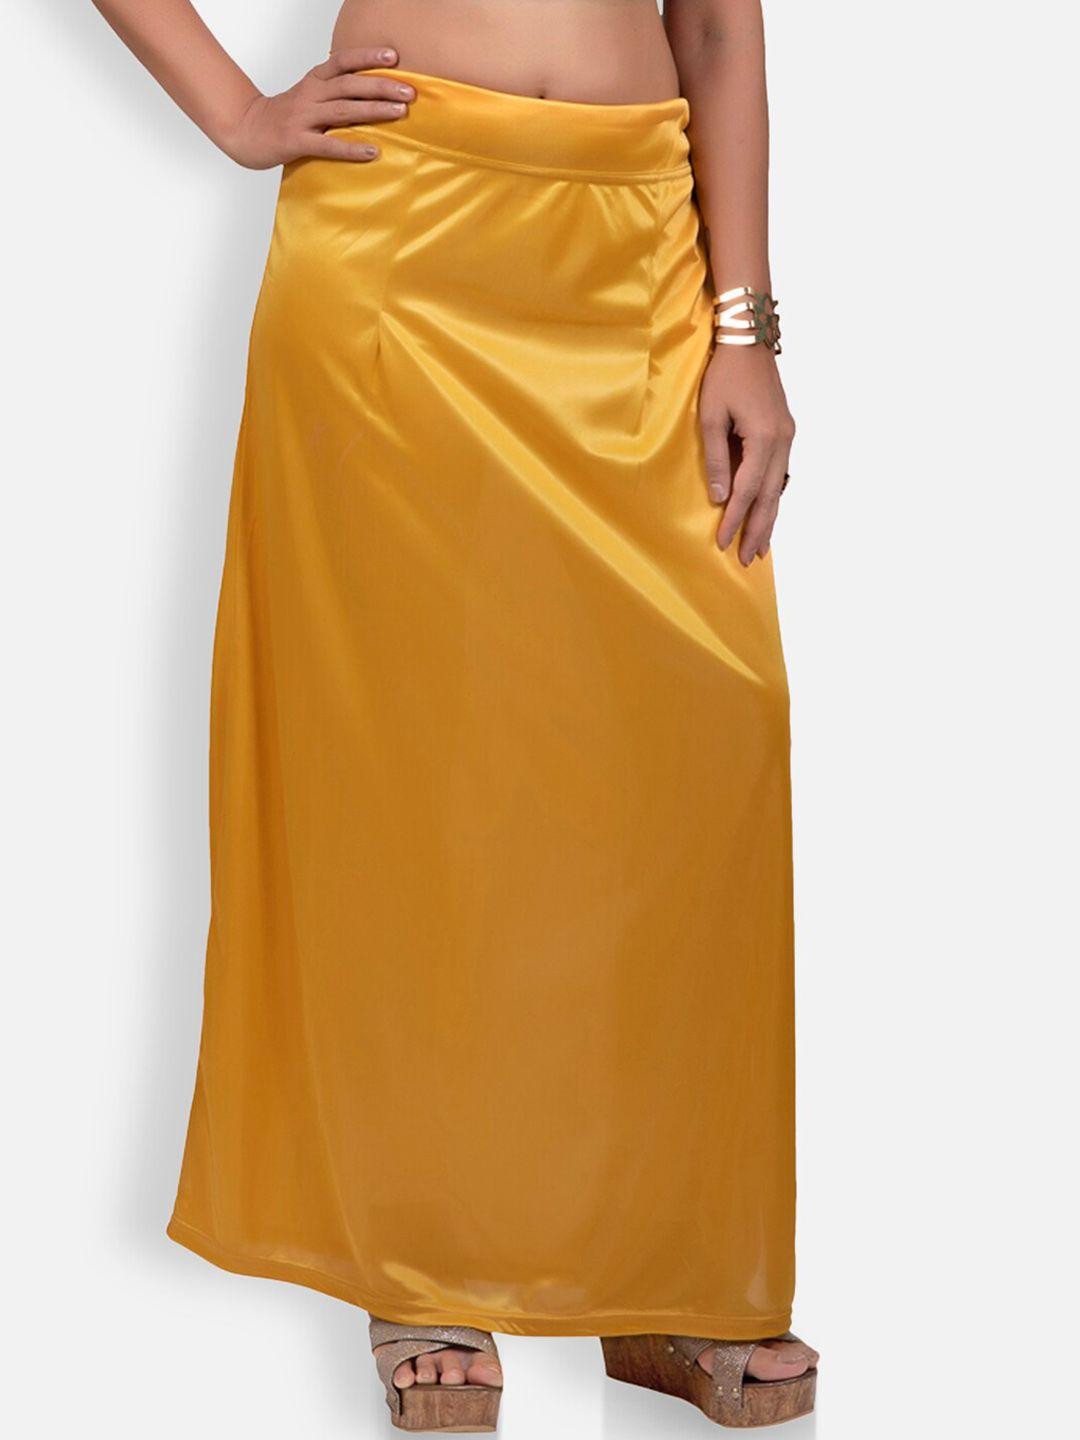 neckbook stretchable saree petticoat